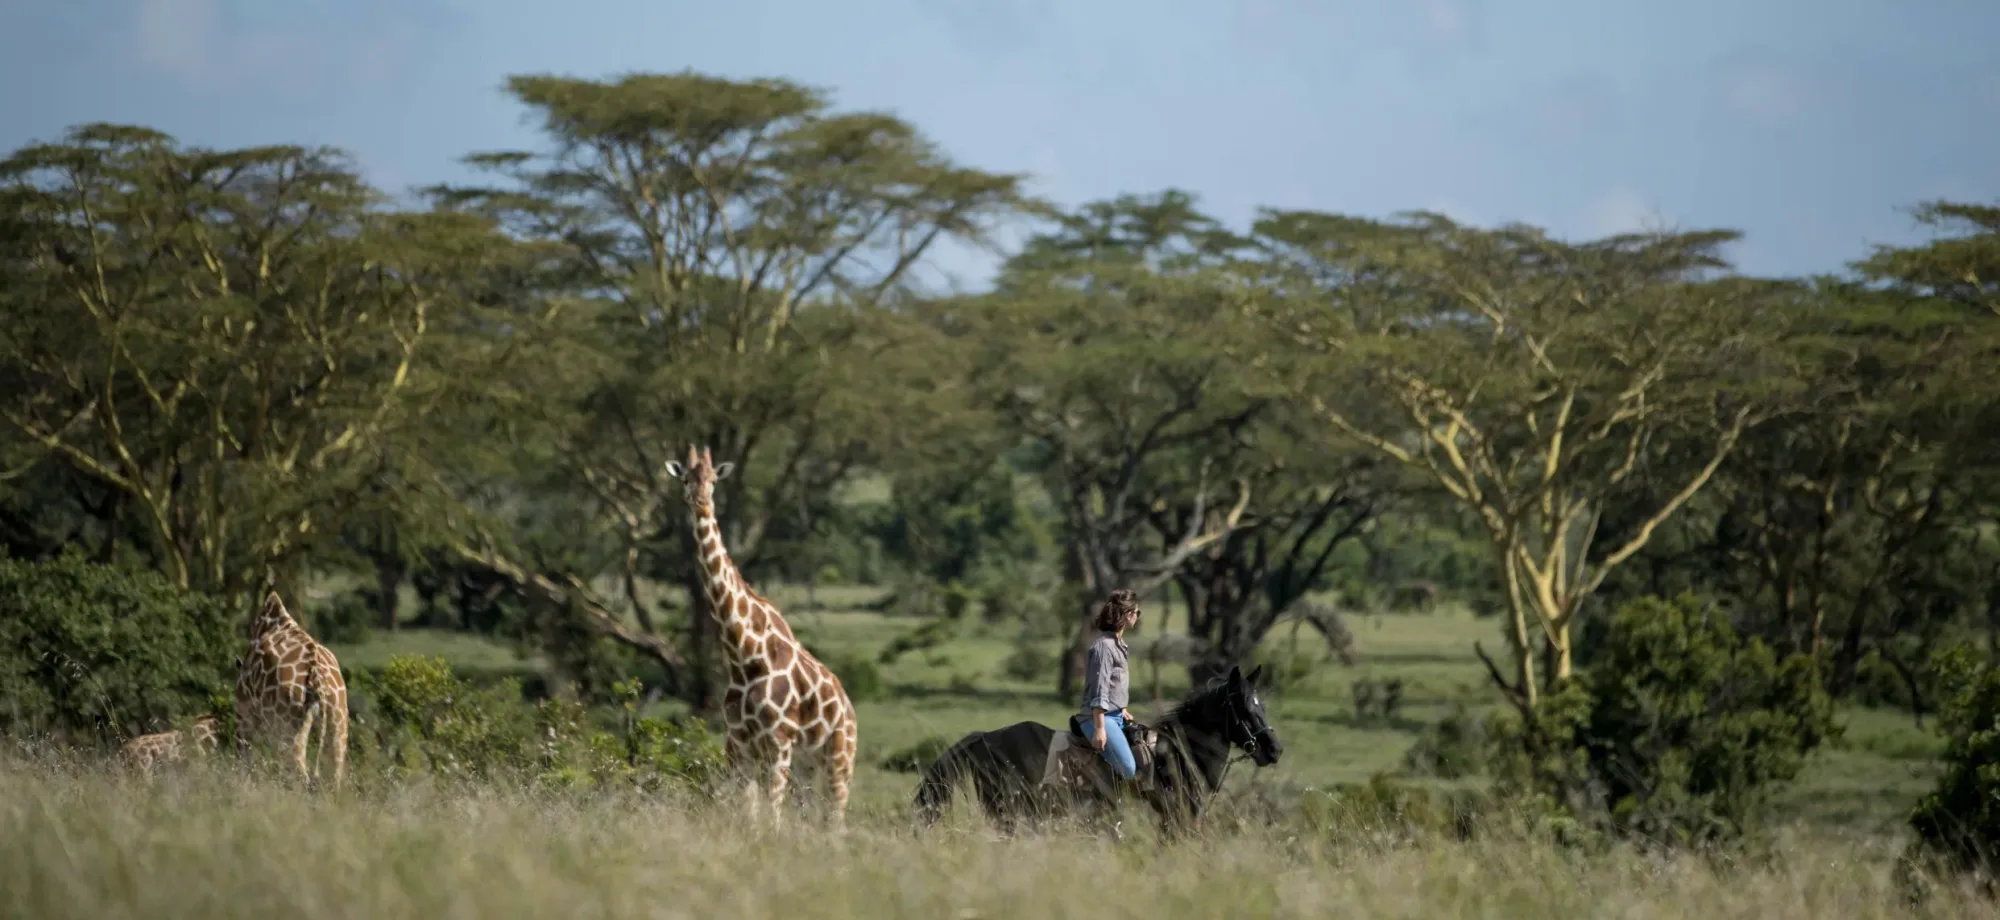 A woman is horseriding among giraffes. 